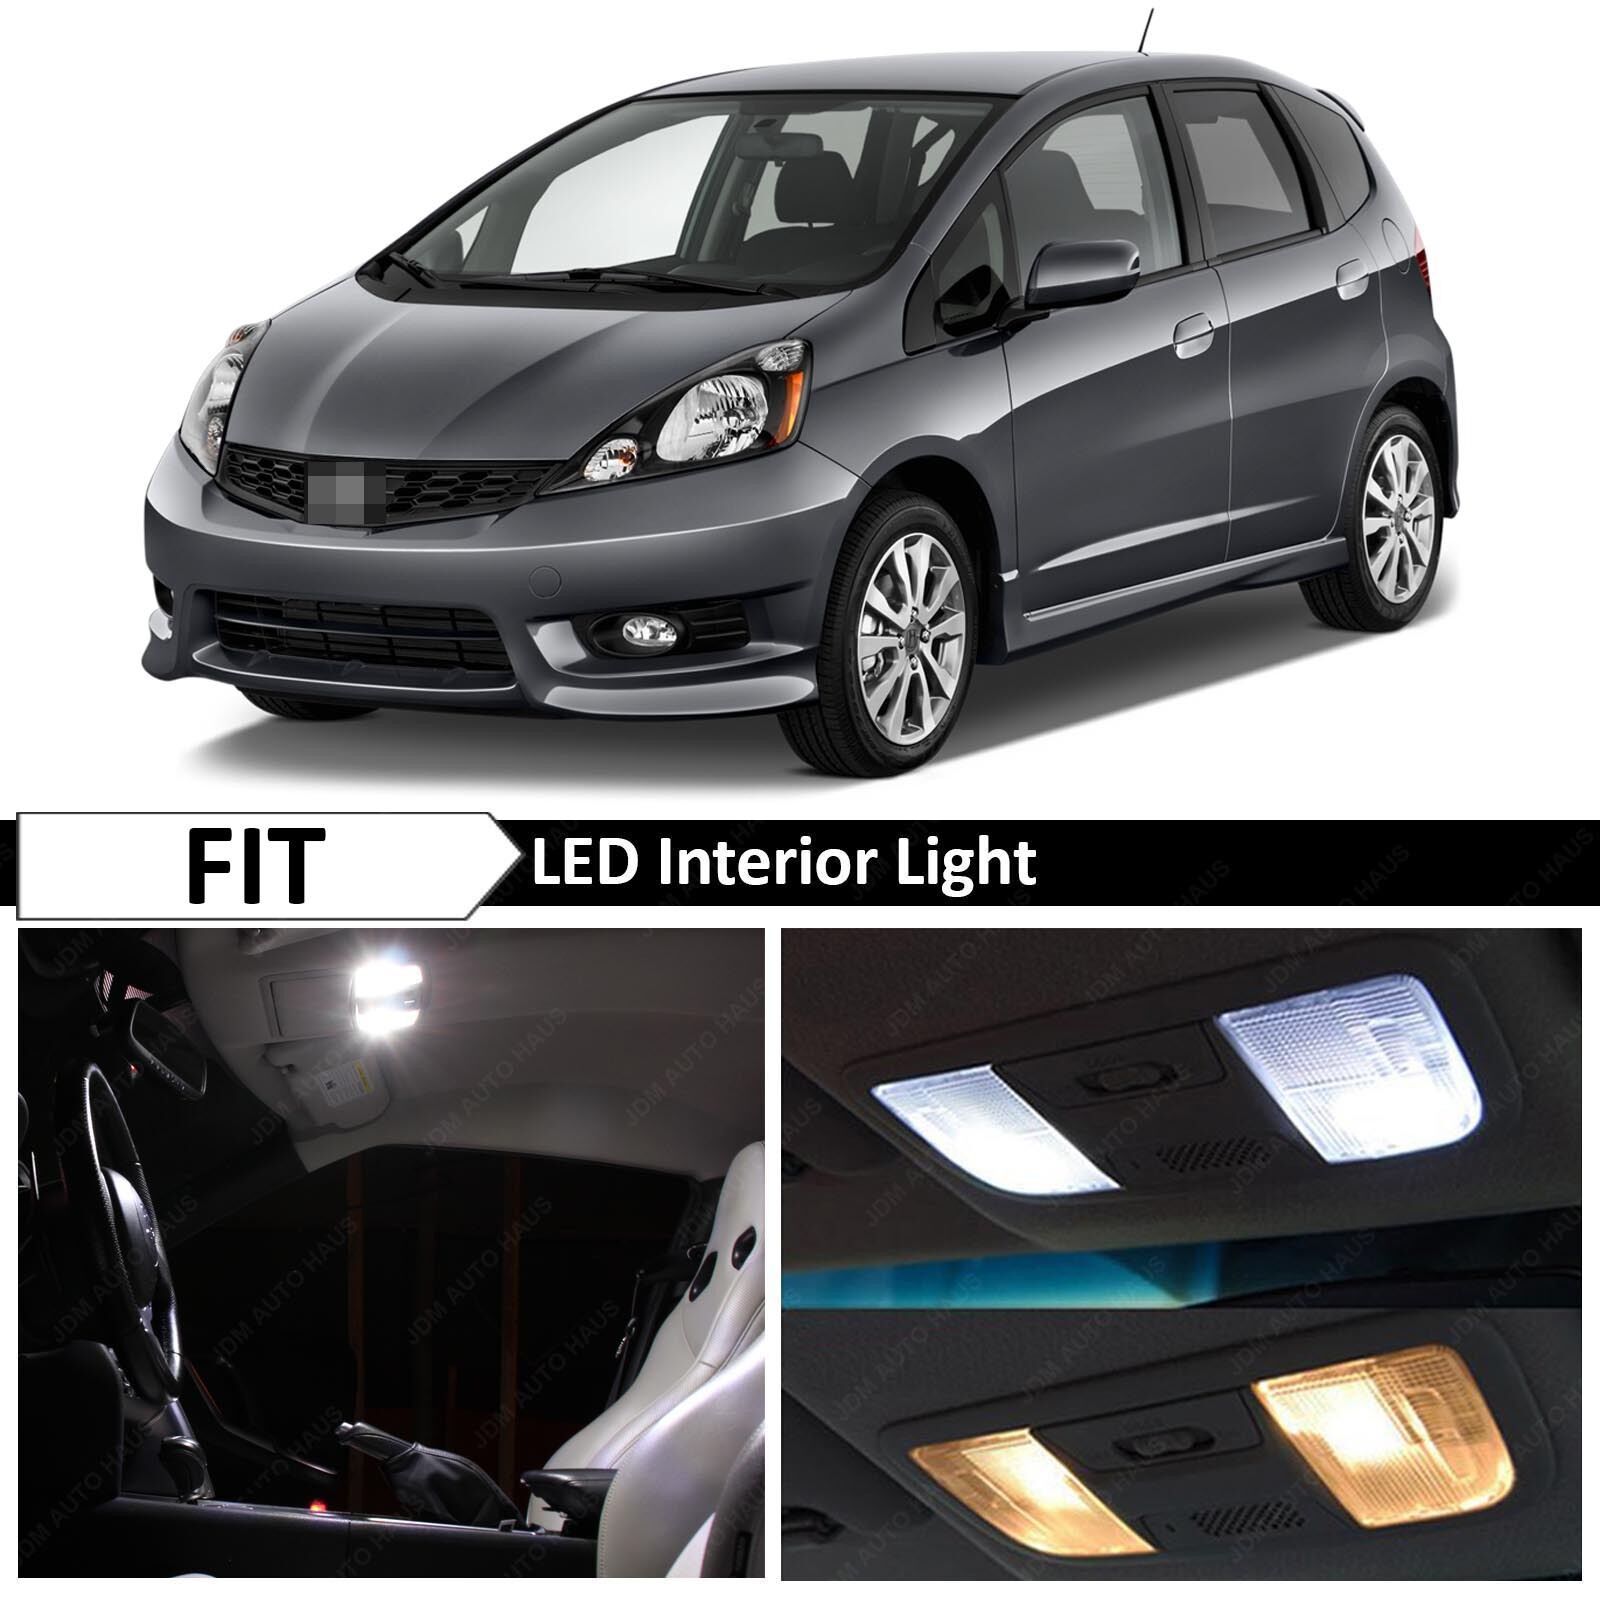 8x White LED Lights Interior Package Kit Fits 2009-2013 Honda Fit Jazz